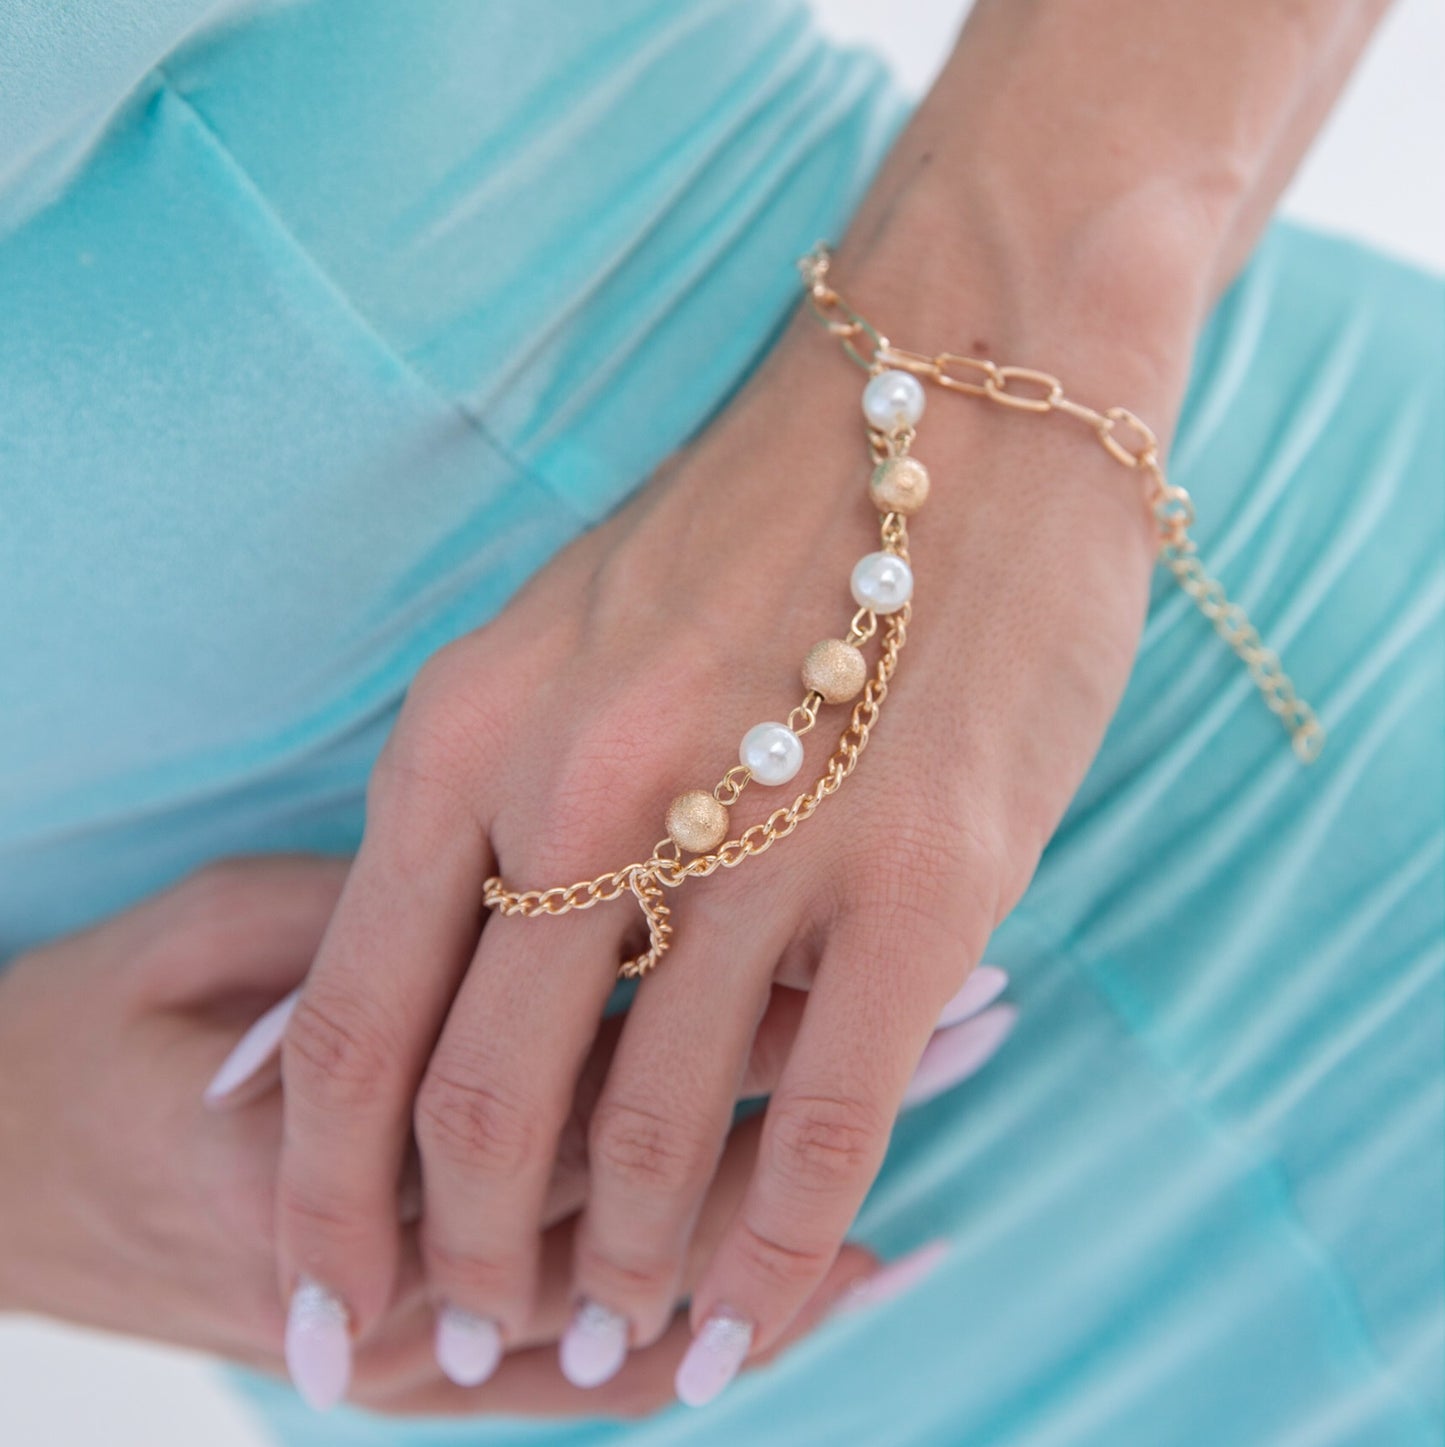 Pin by nane on J | Hand chain bracelet, Jewelry patterns, Hand chain